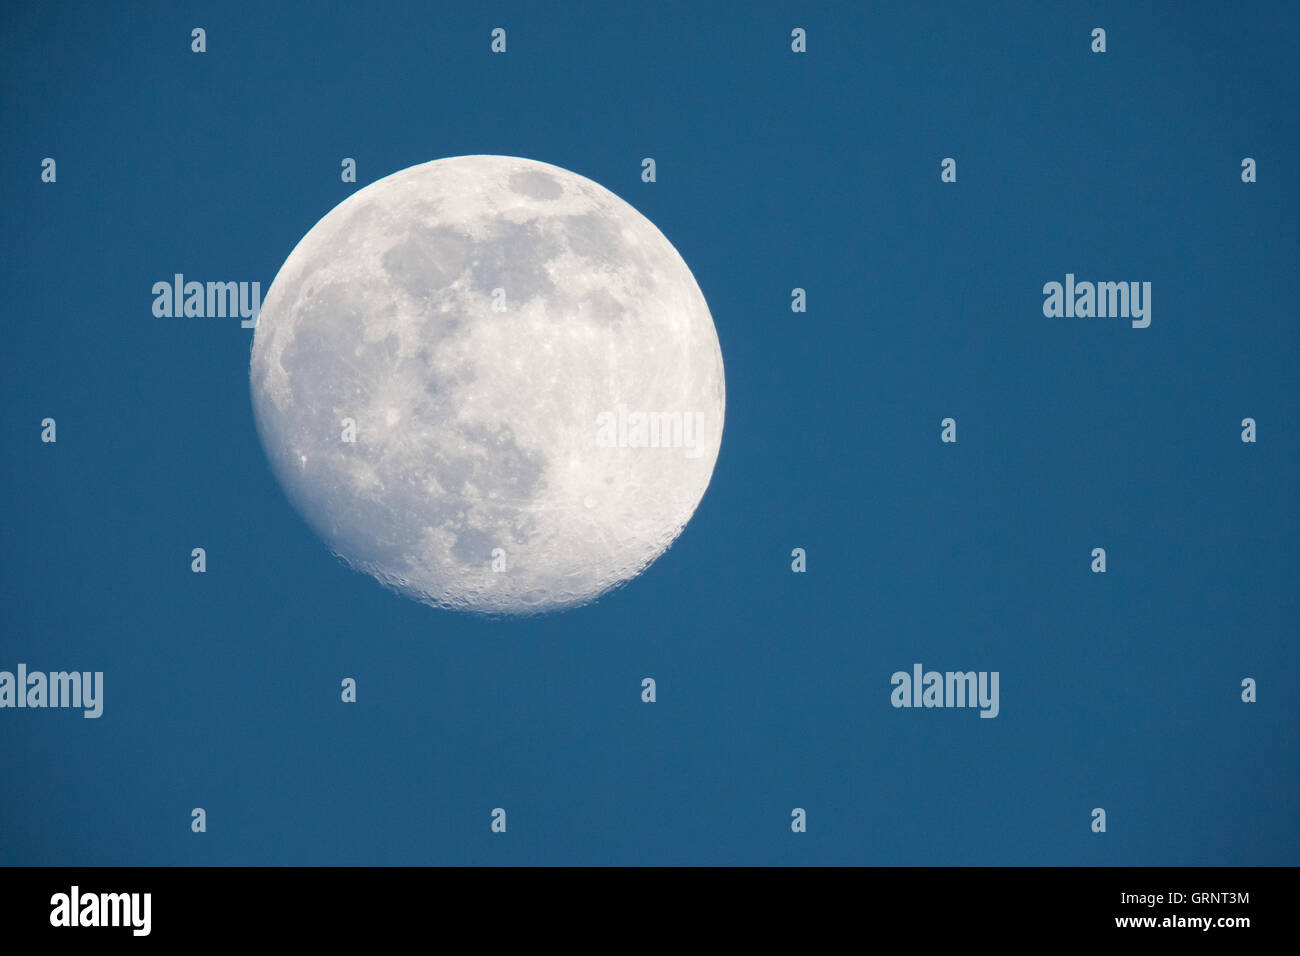 The Moon in the Blue Sky at Nannaj Solapur Stock Photo